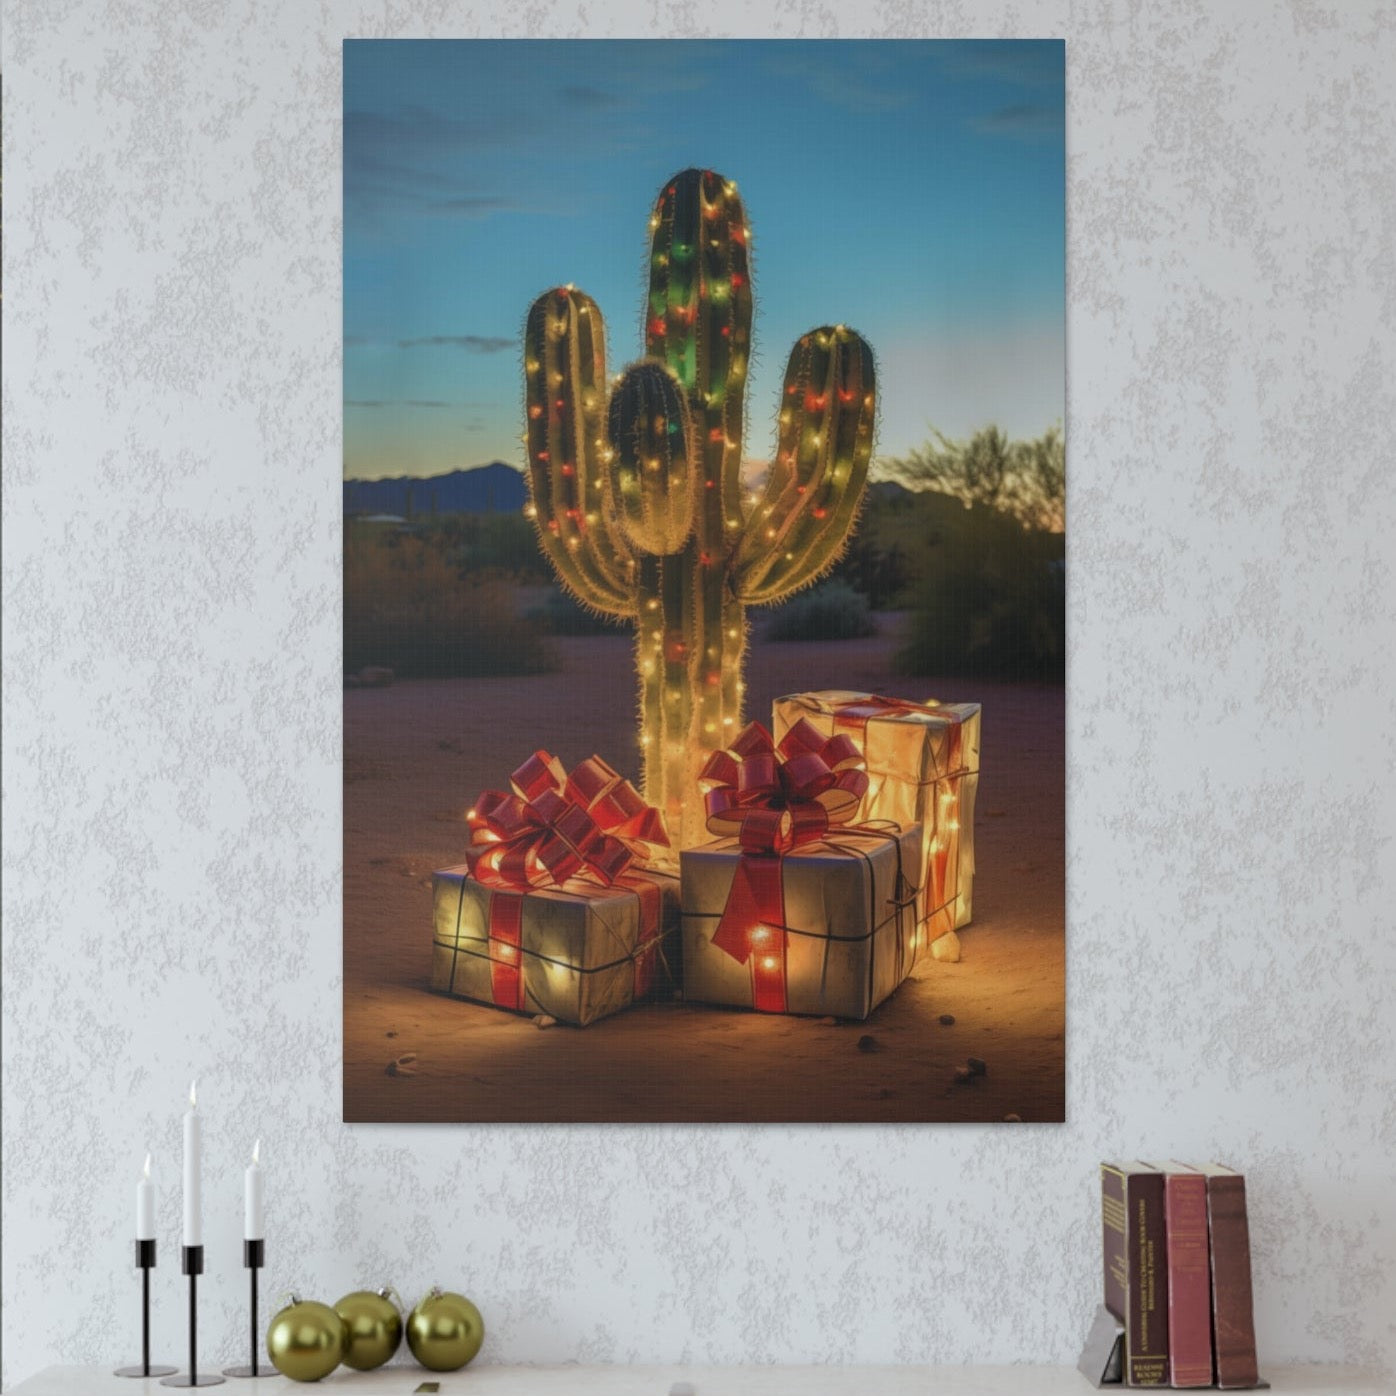 Cactus Christmas Tree wall decor